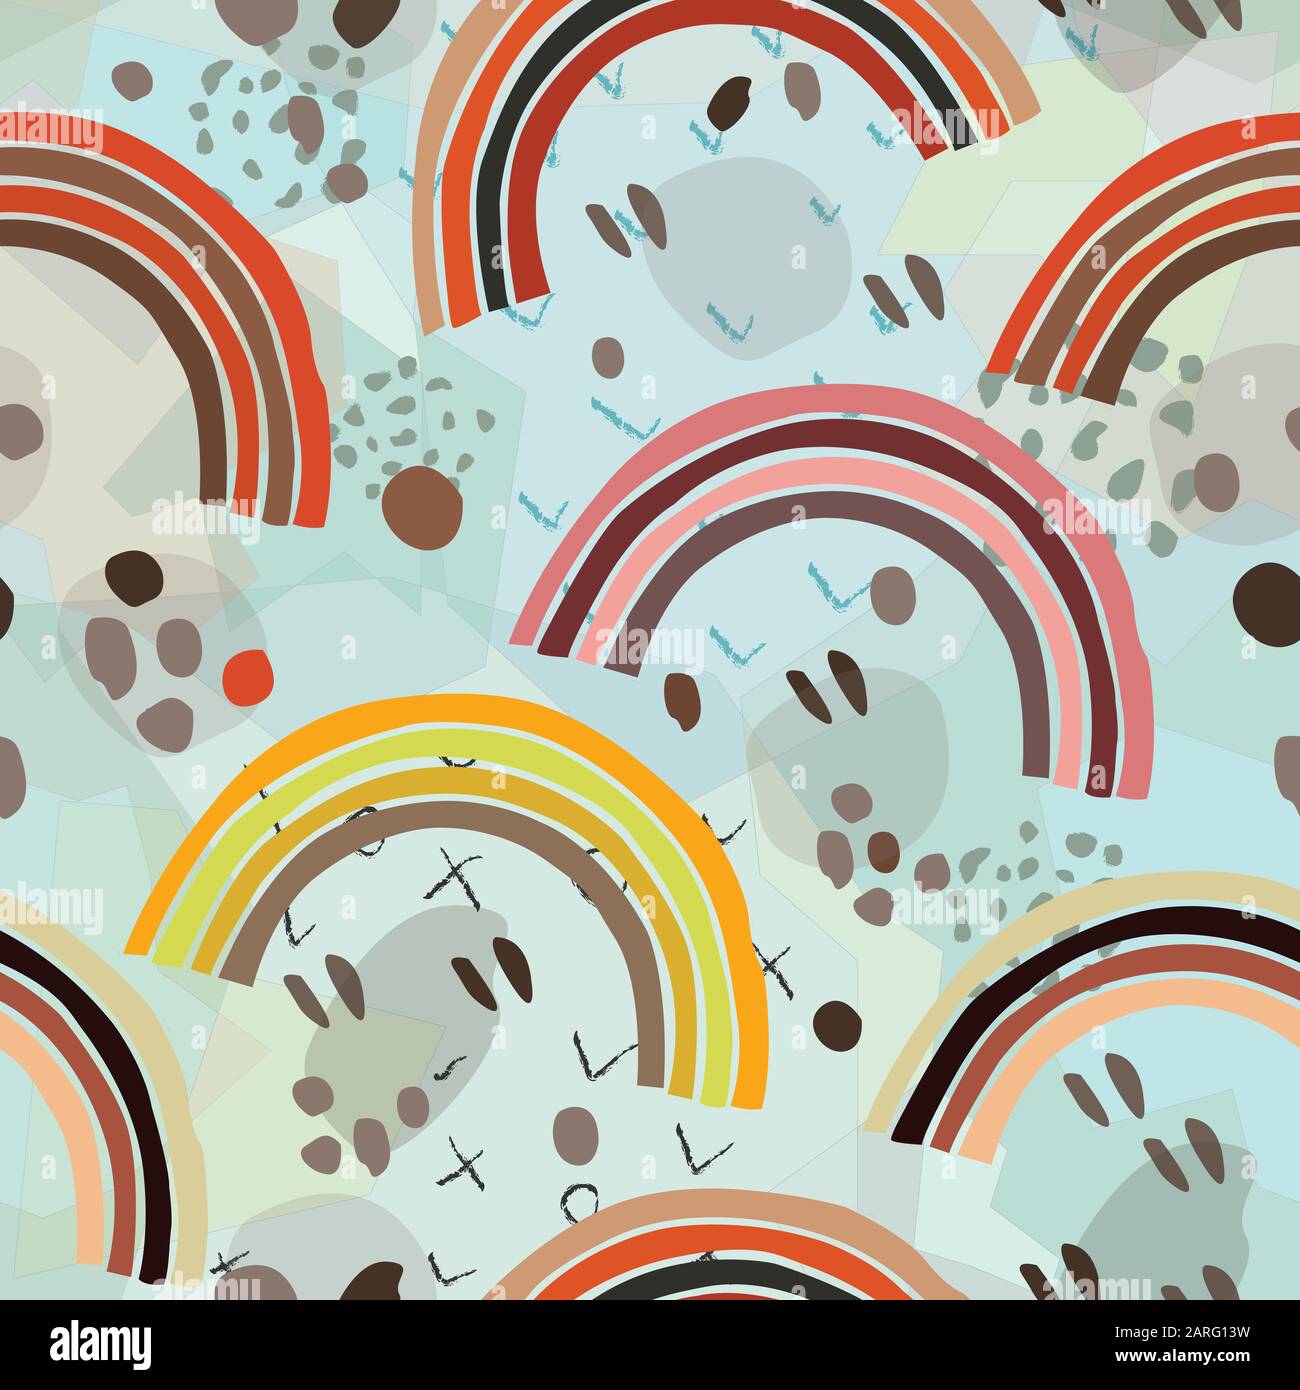 Cute skandinavischen Terrakotta Muster in modernen Farben. Rainbow Terrakotta Vibes. Moderne abstrakte Kunst für Ausdrucke. Nordic Design Stock Vektor